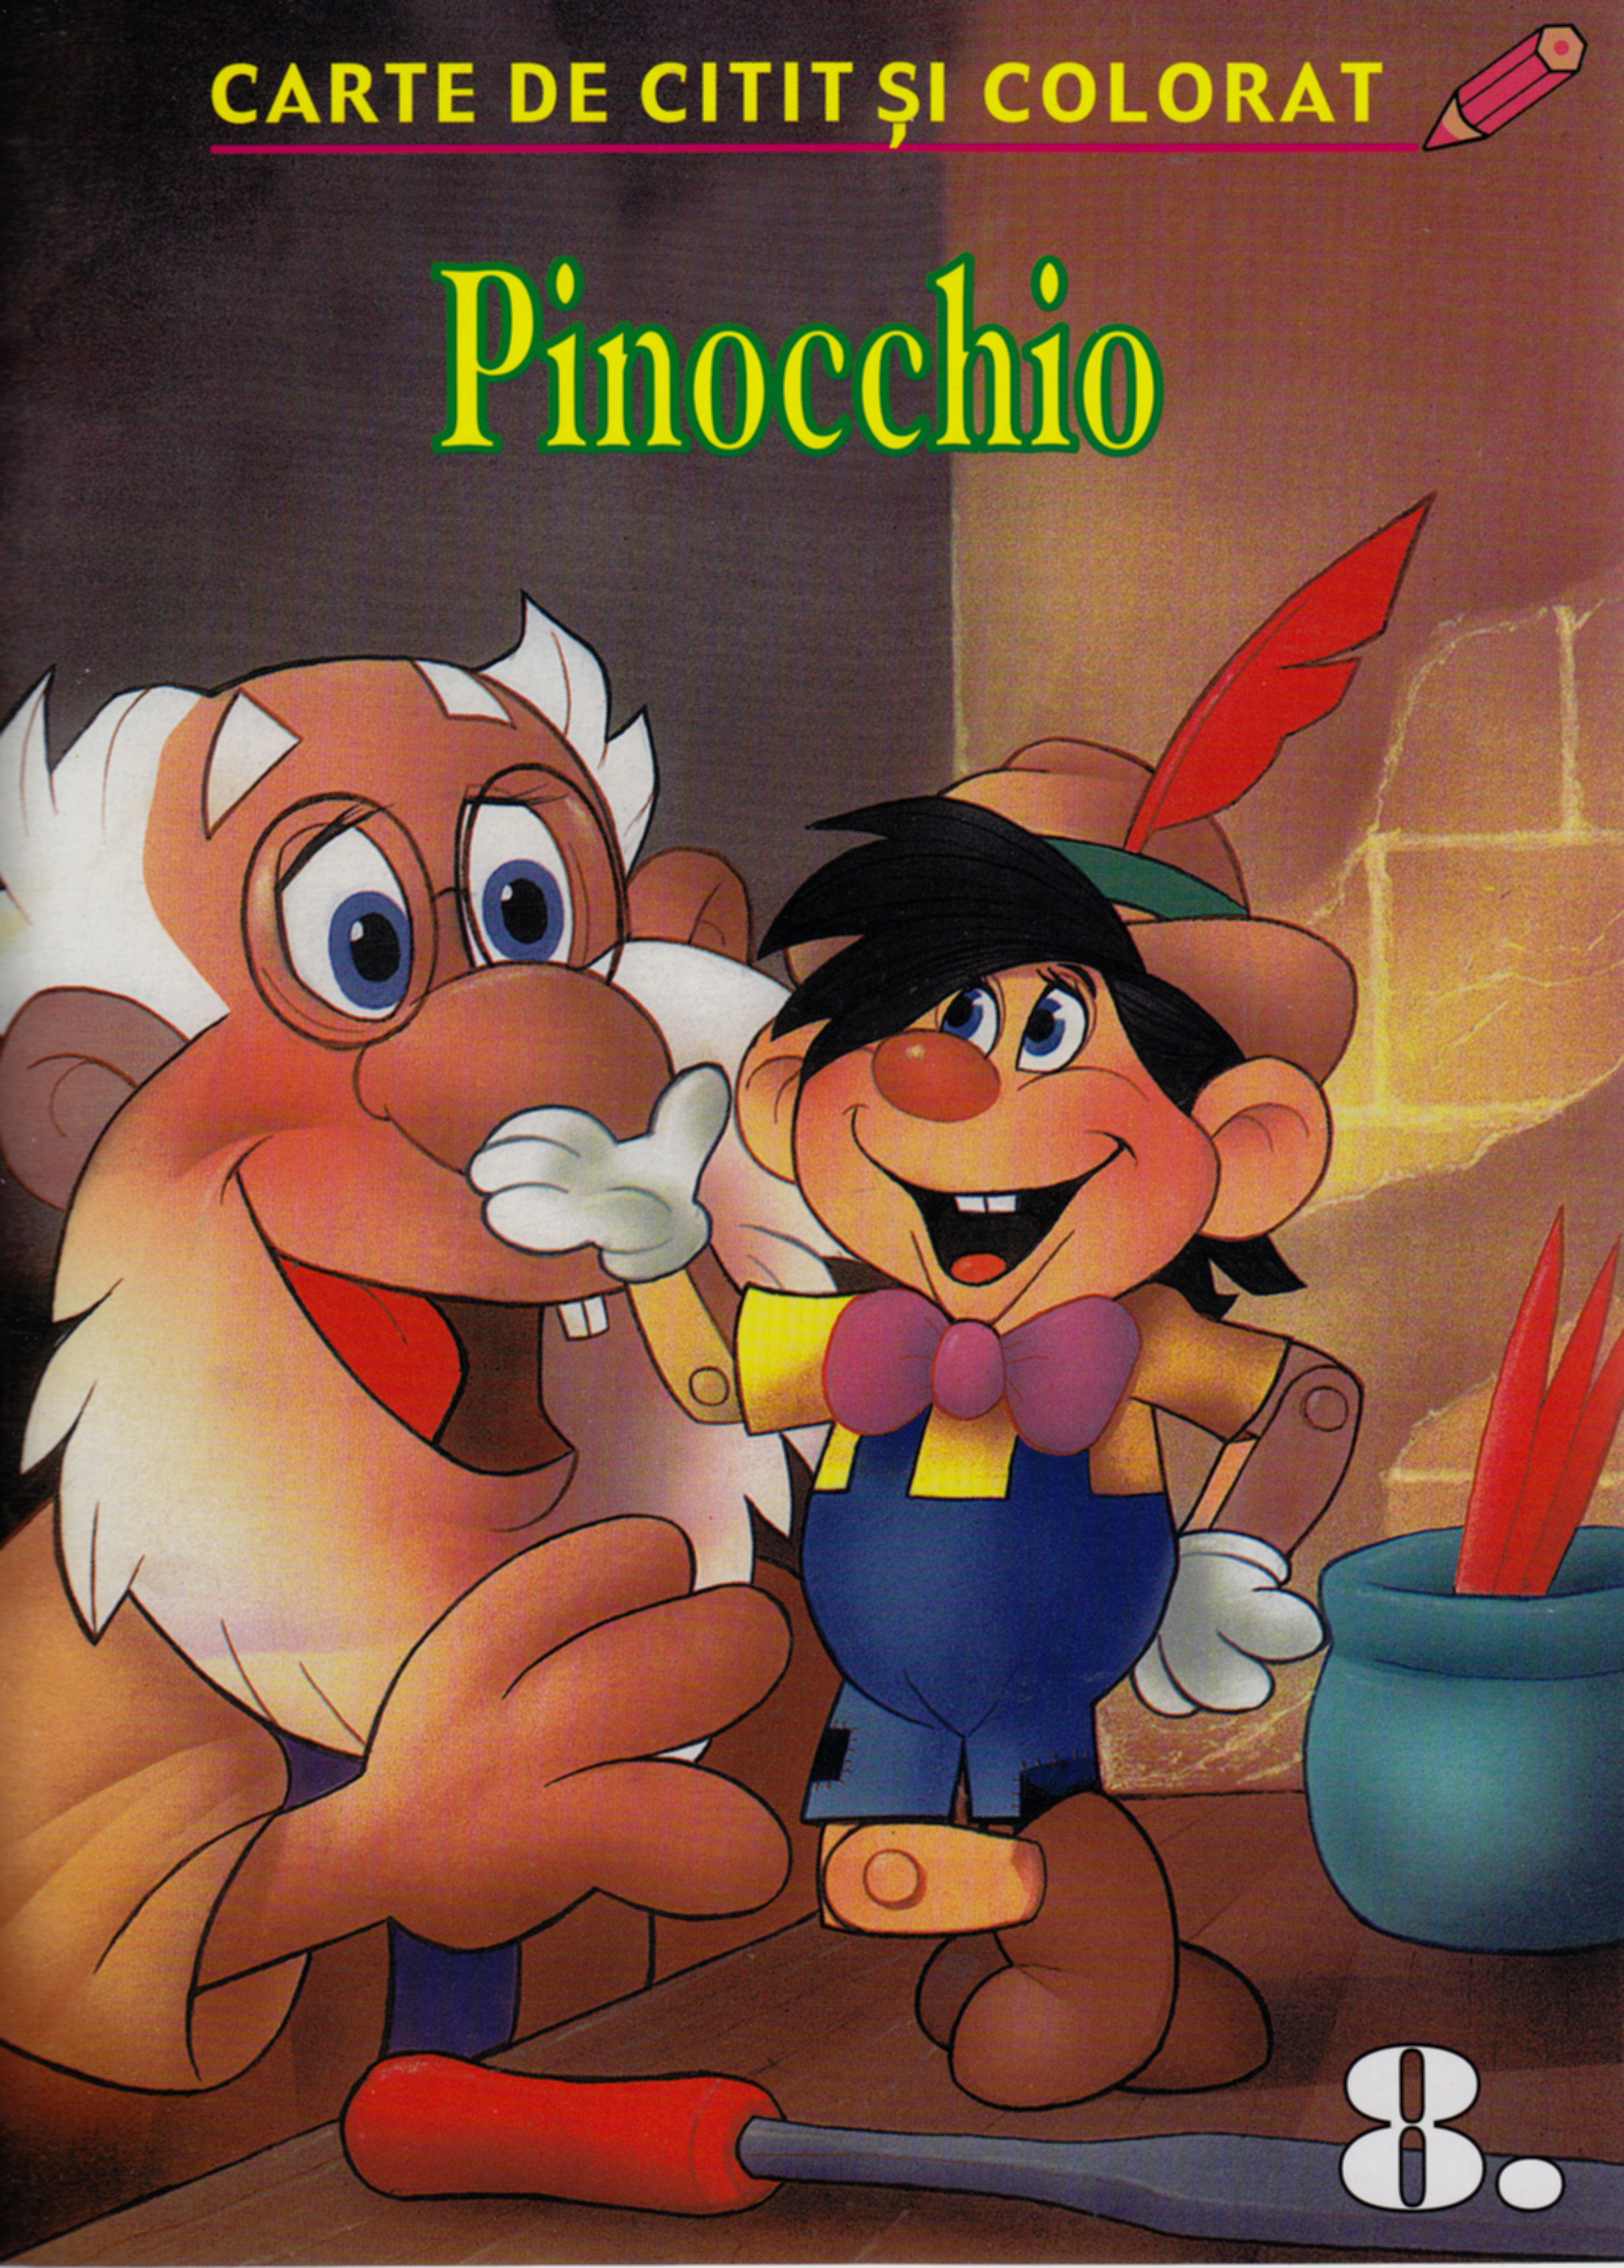 Pinocchio - Carte de citit si colorat